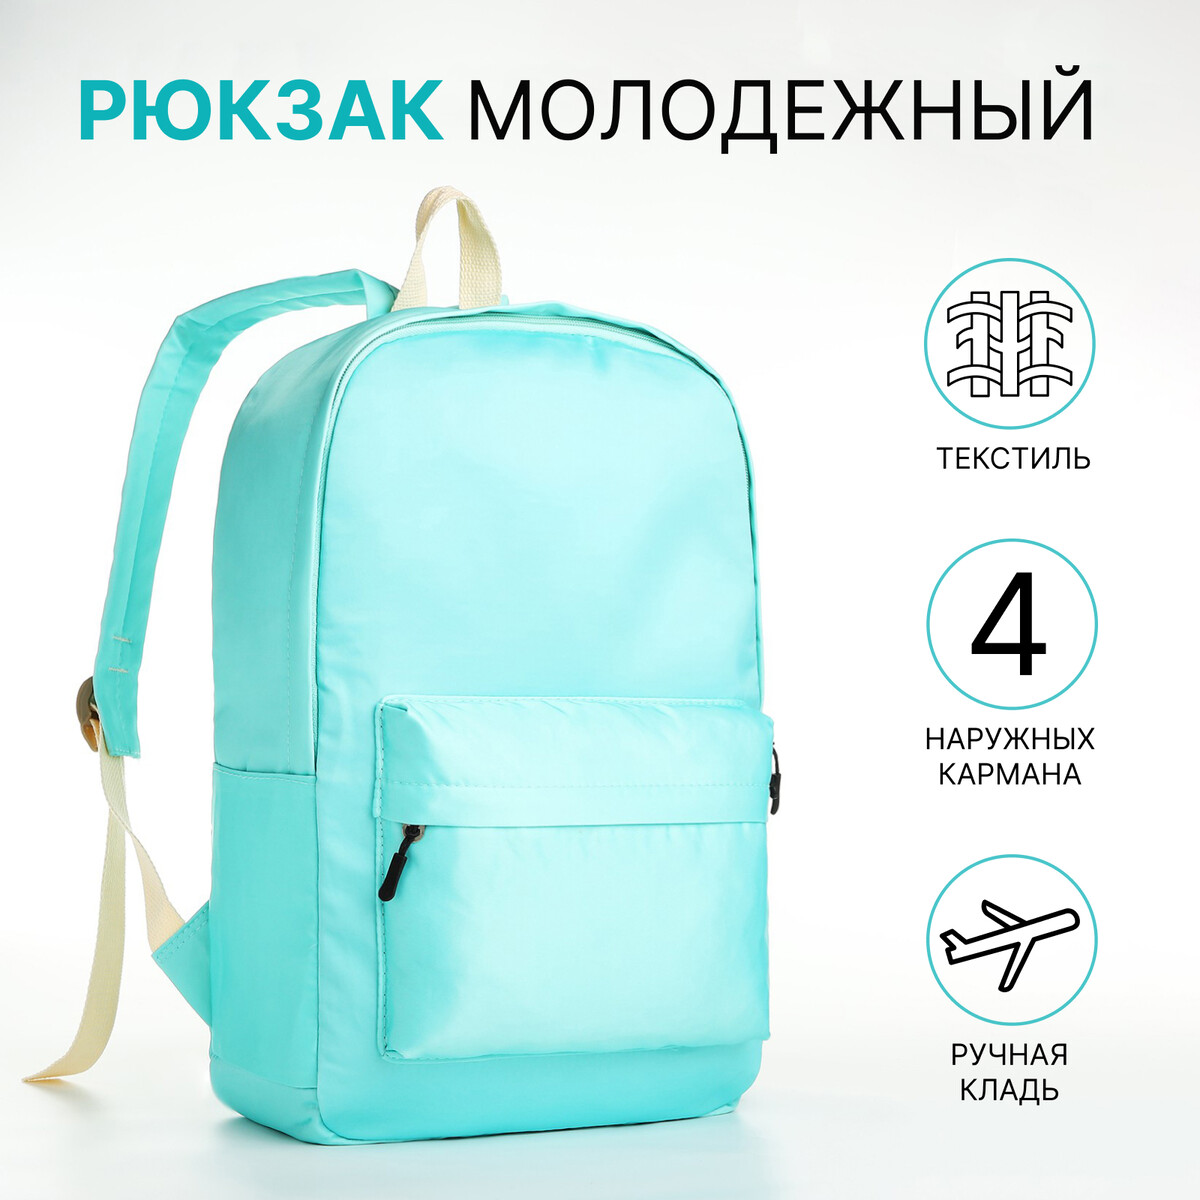 Рюкзак молодежный из текстиля на молнии, 2 кармана, цвет бирюзовый рюкзак школьный из текстиля 3 кармана бирюзовый